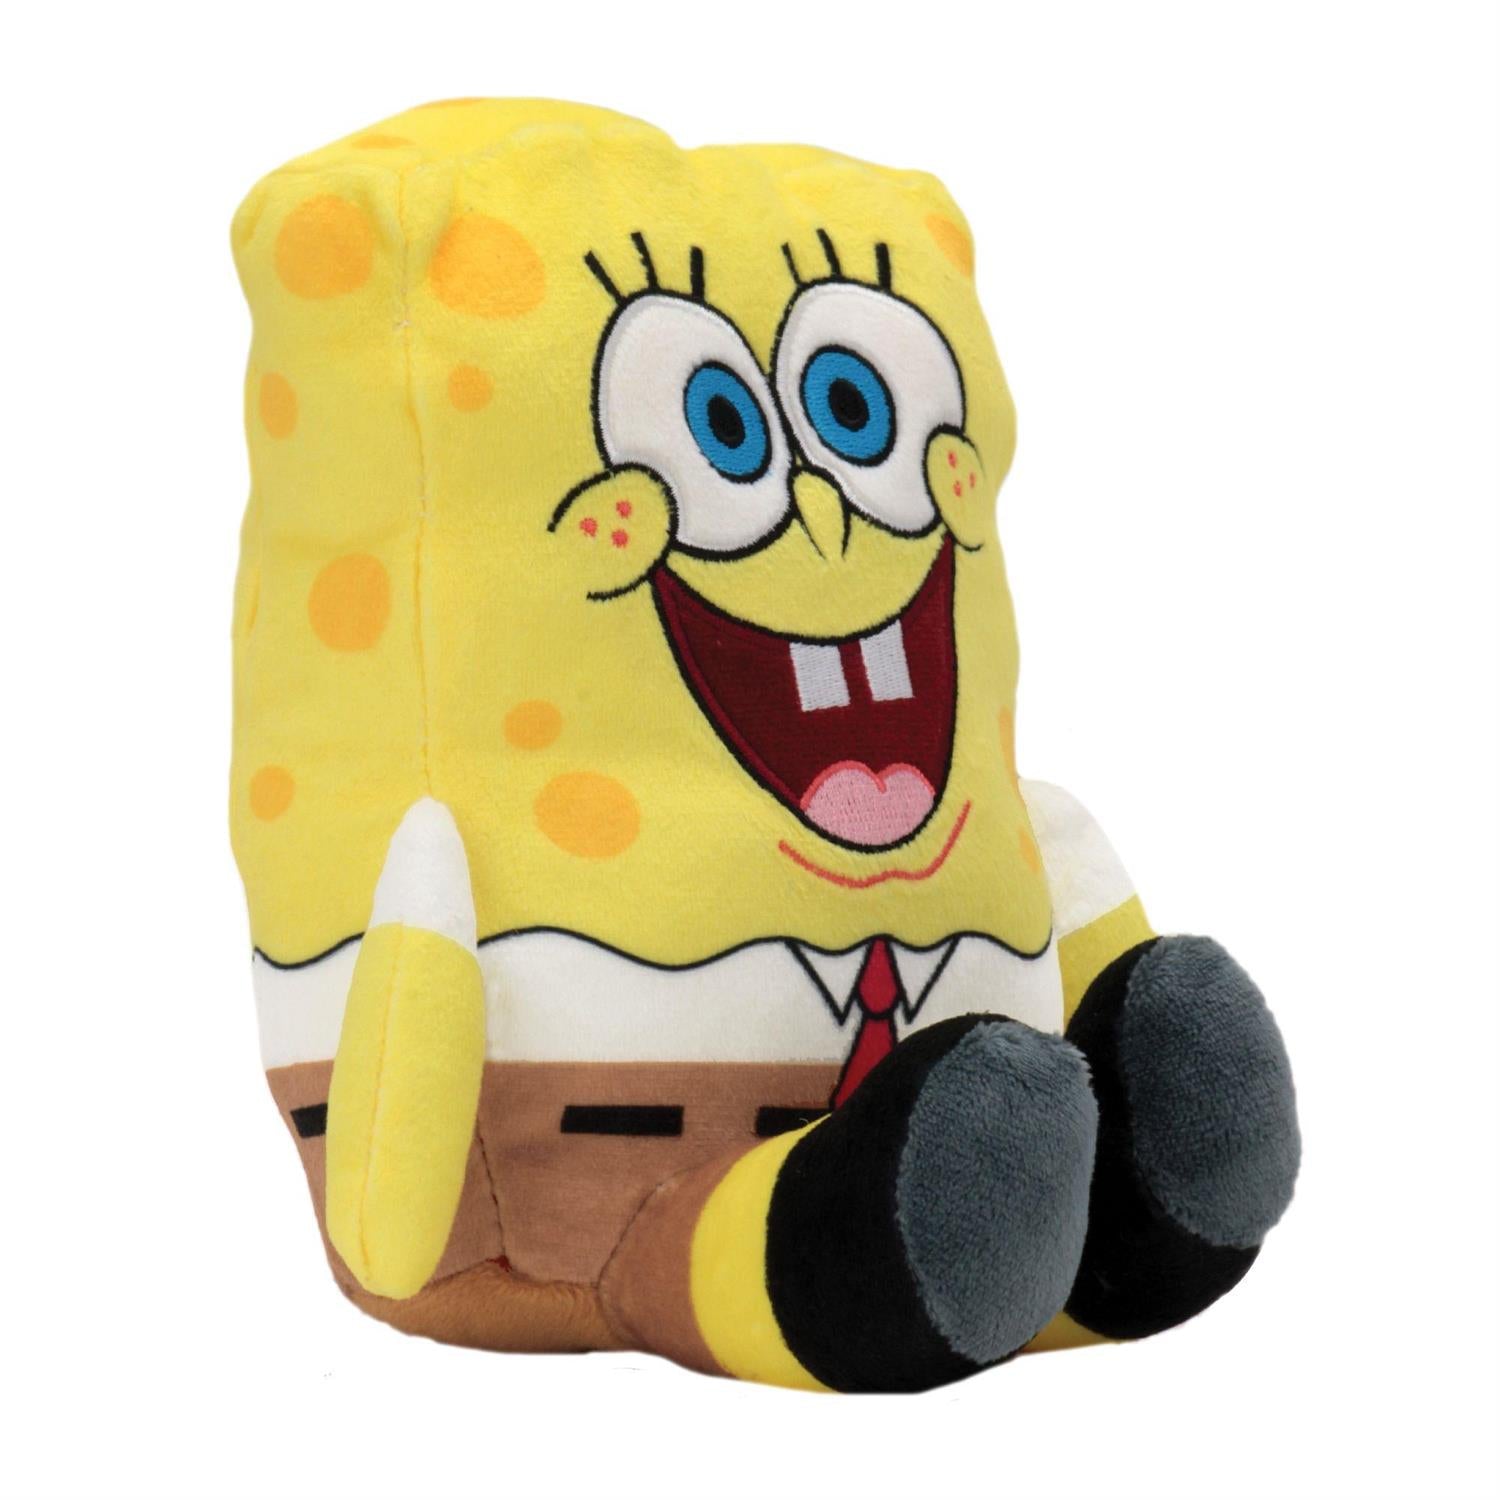 Spongebob (Sitting) - Phunny Plush by Kidrobot